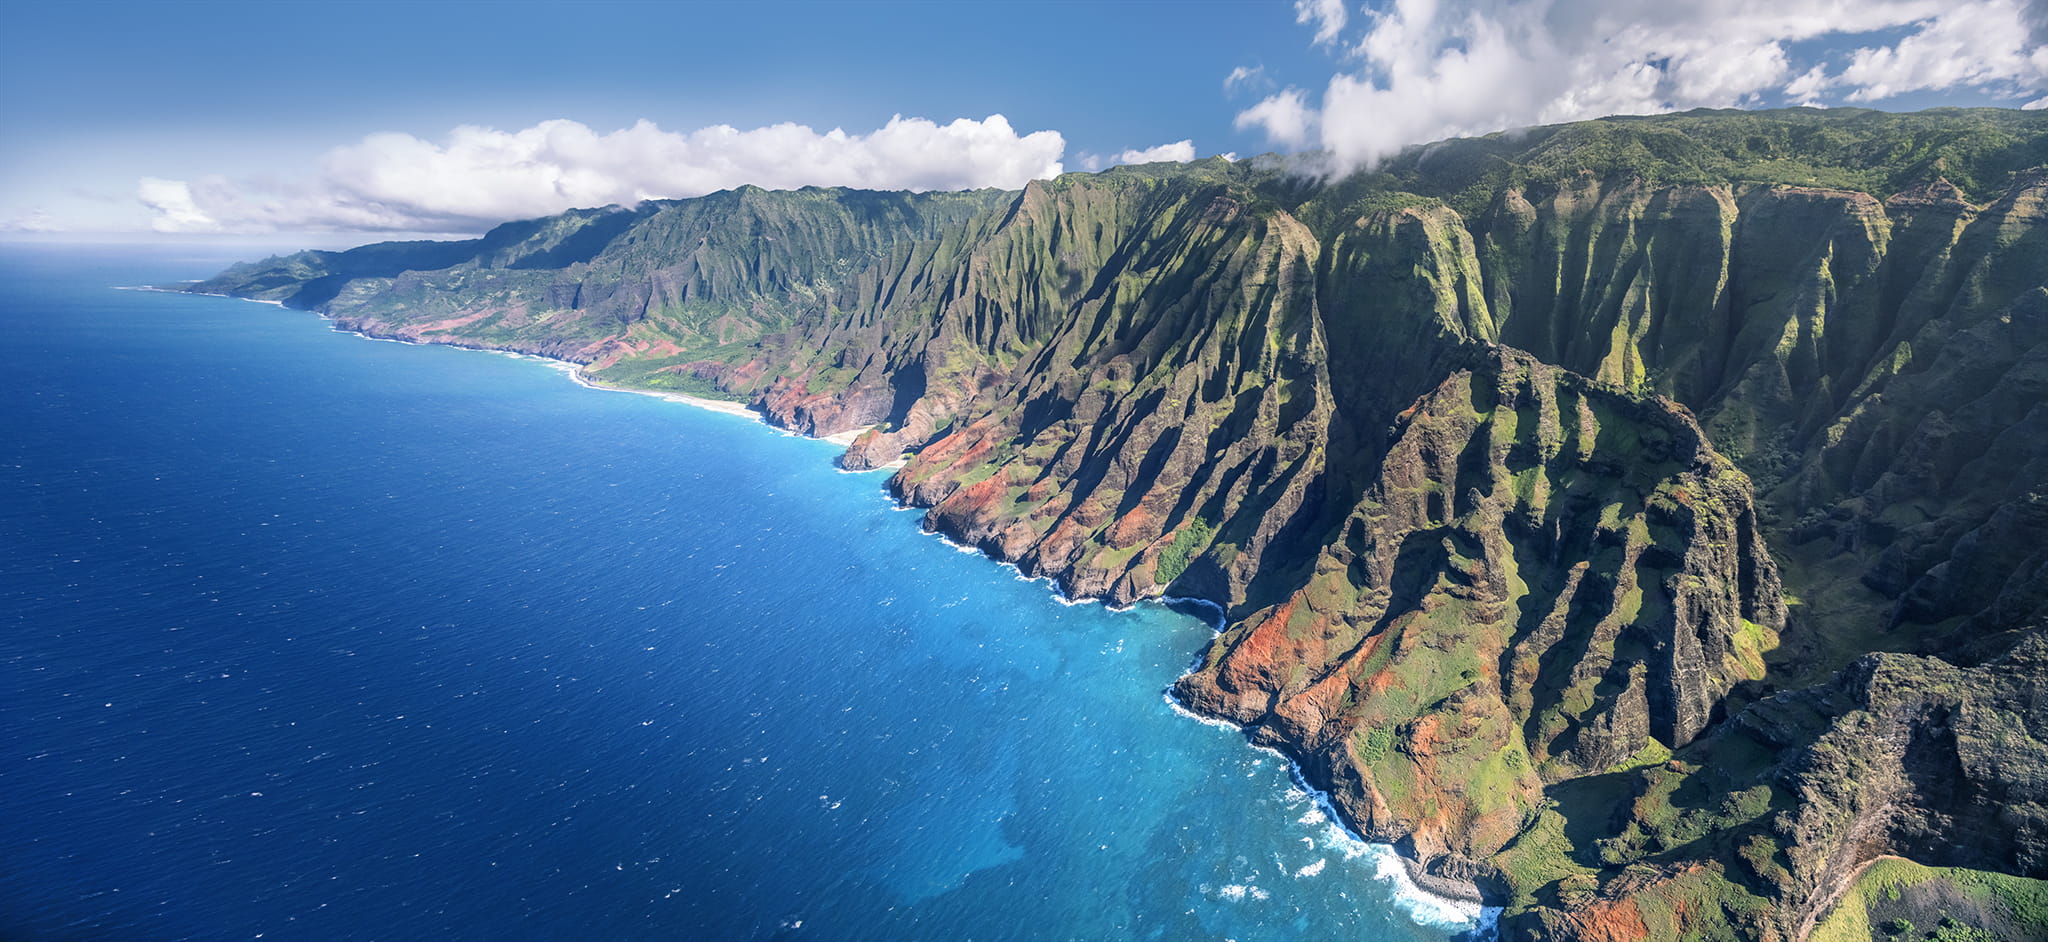 Kauai Coastline Aerial View